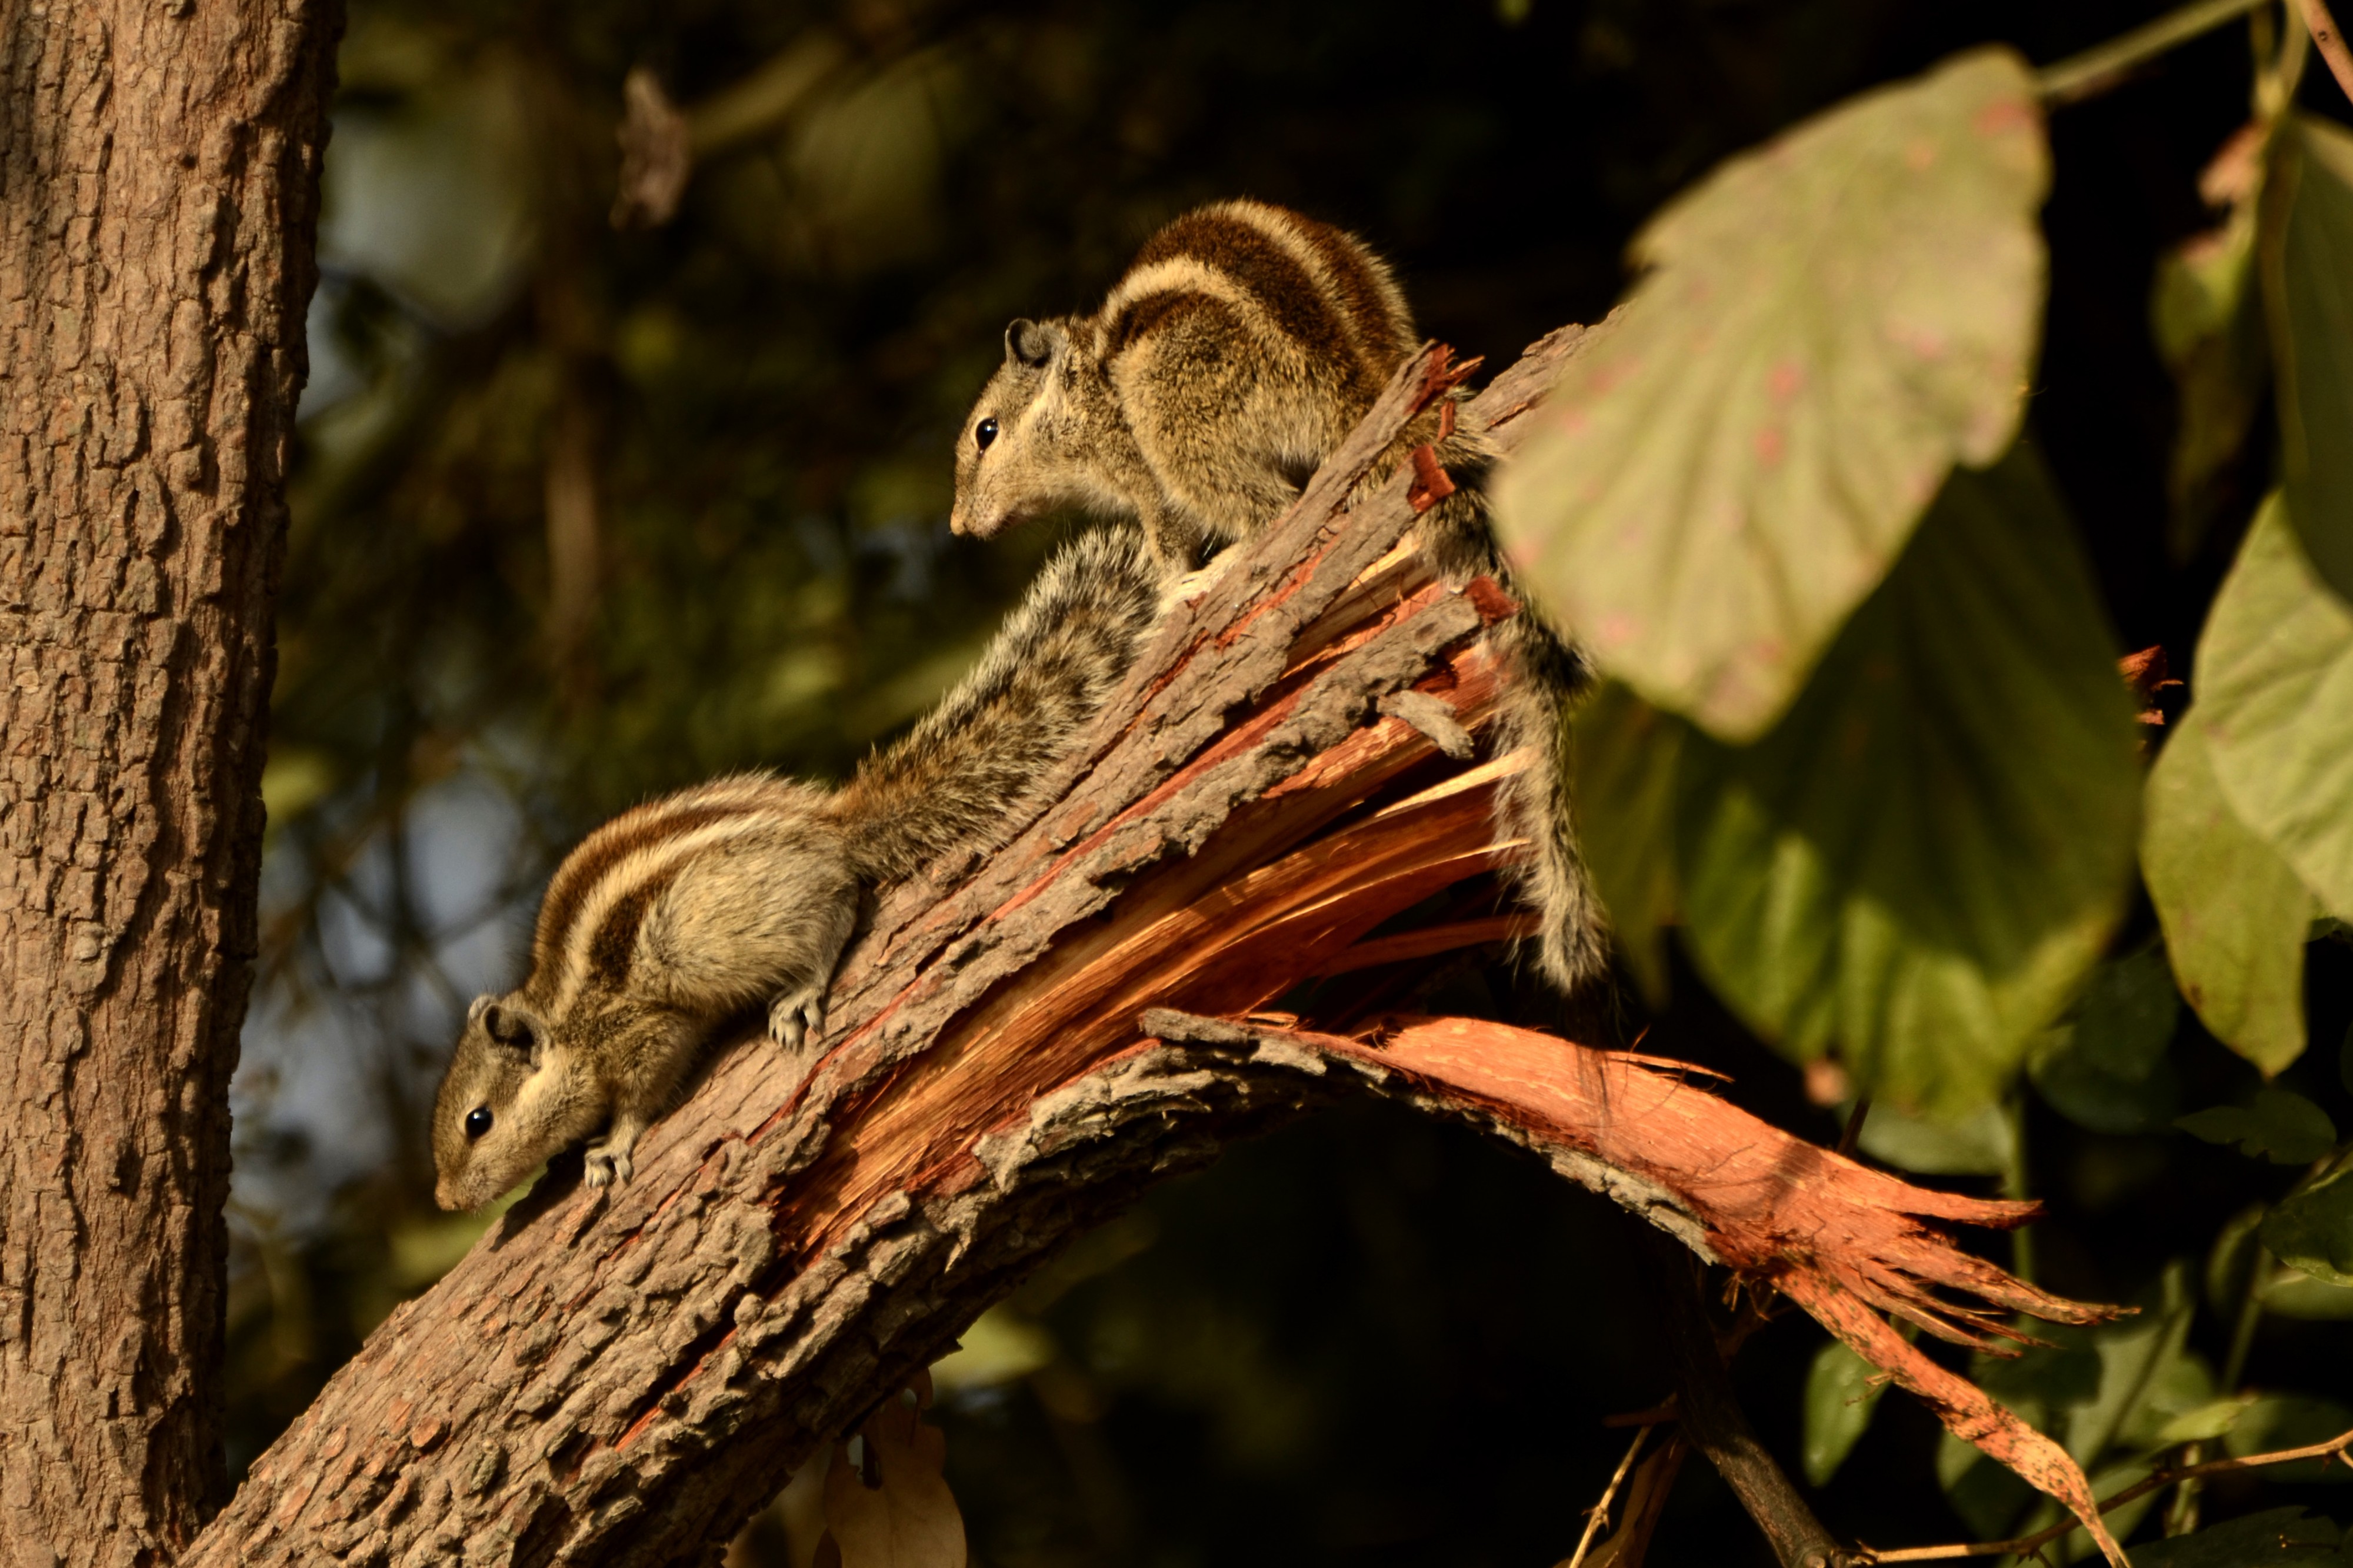 Northern palm squirrel (Funambulus pennantii) from keoladeo national park JEG2626